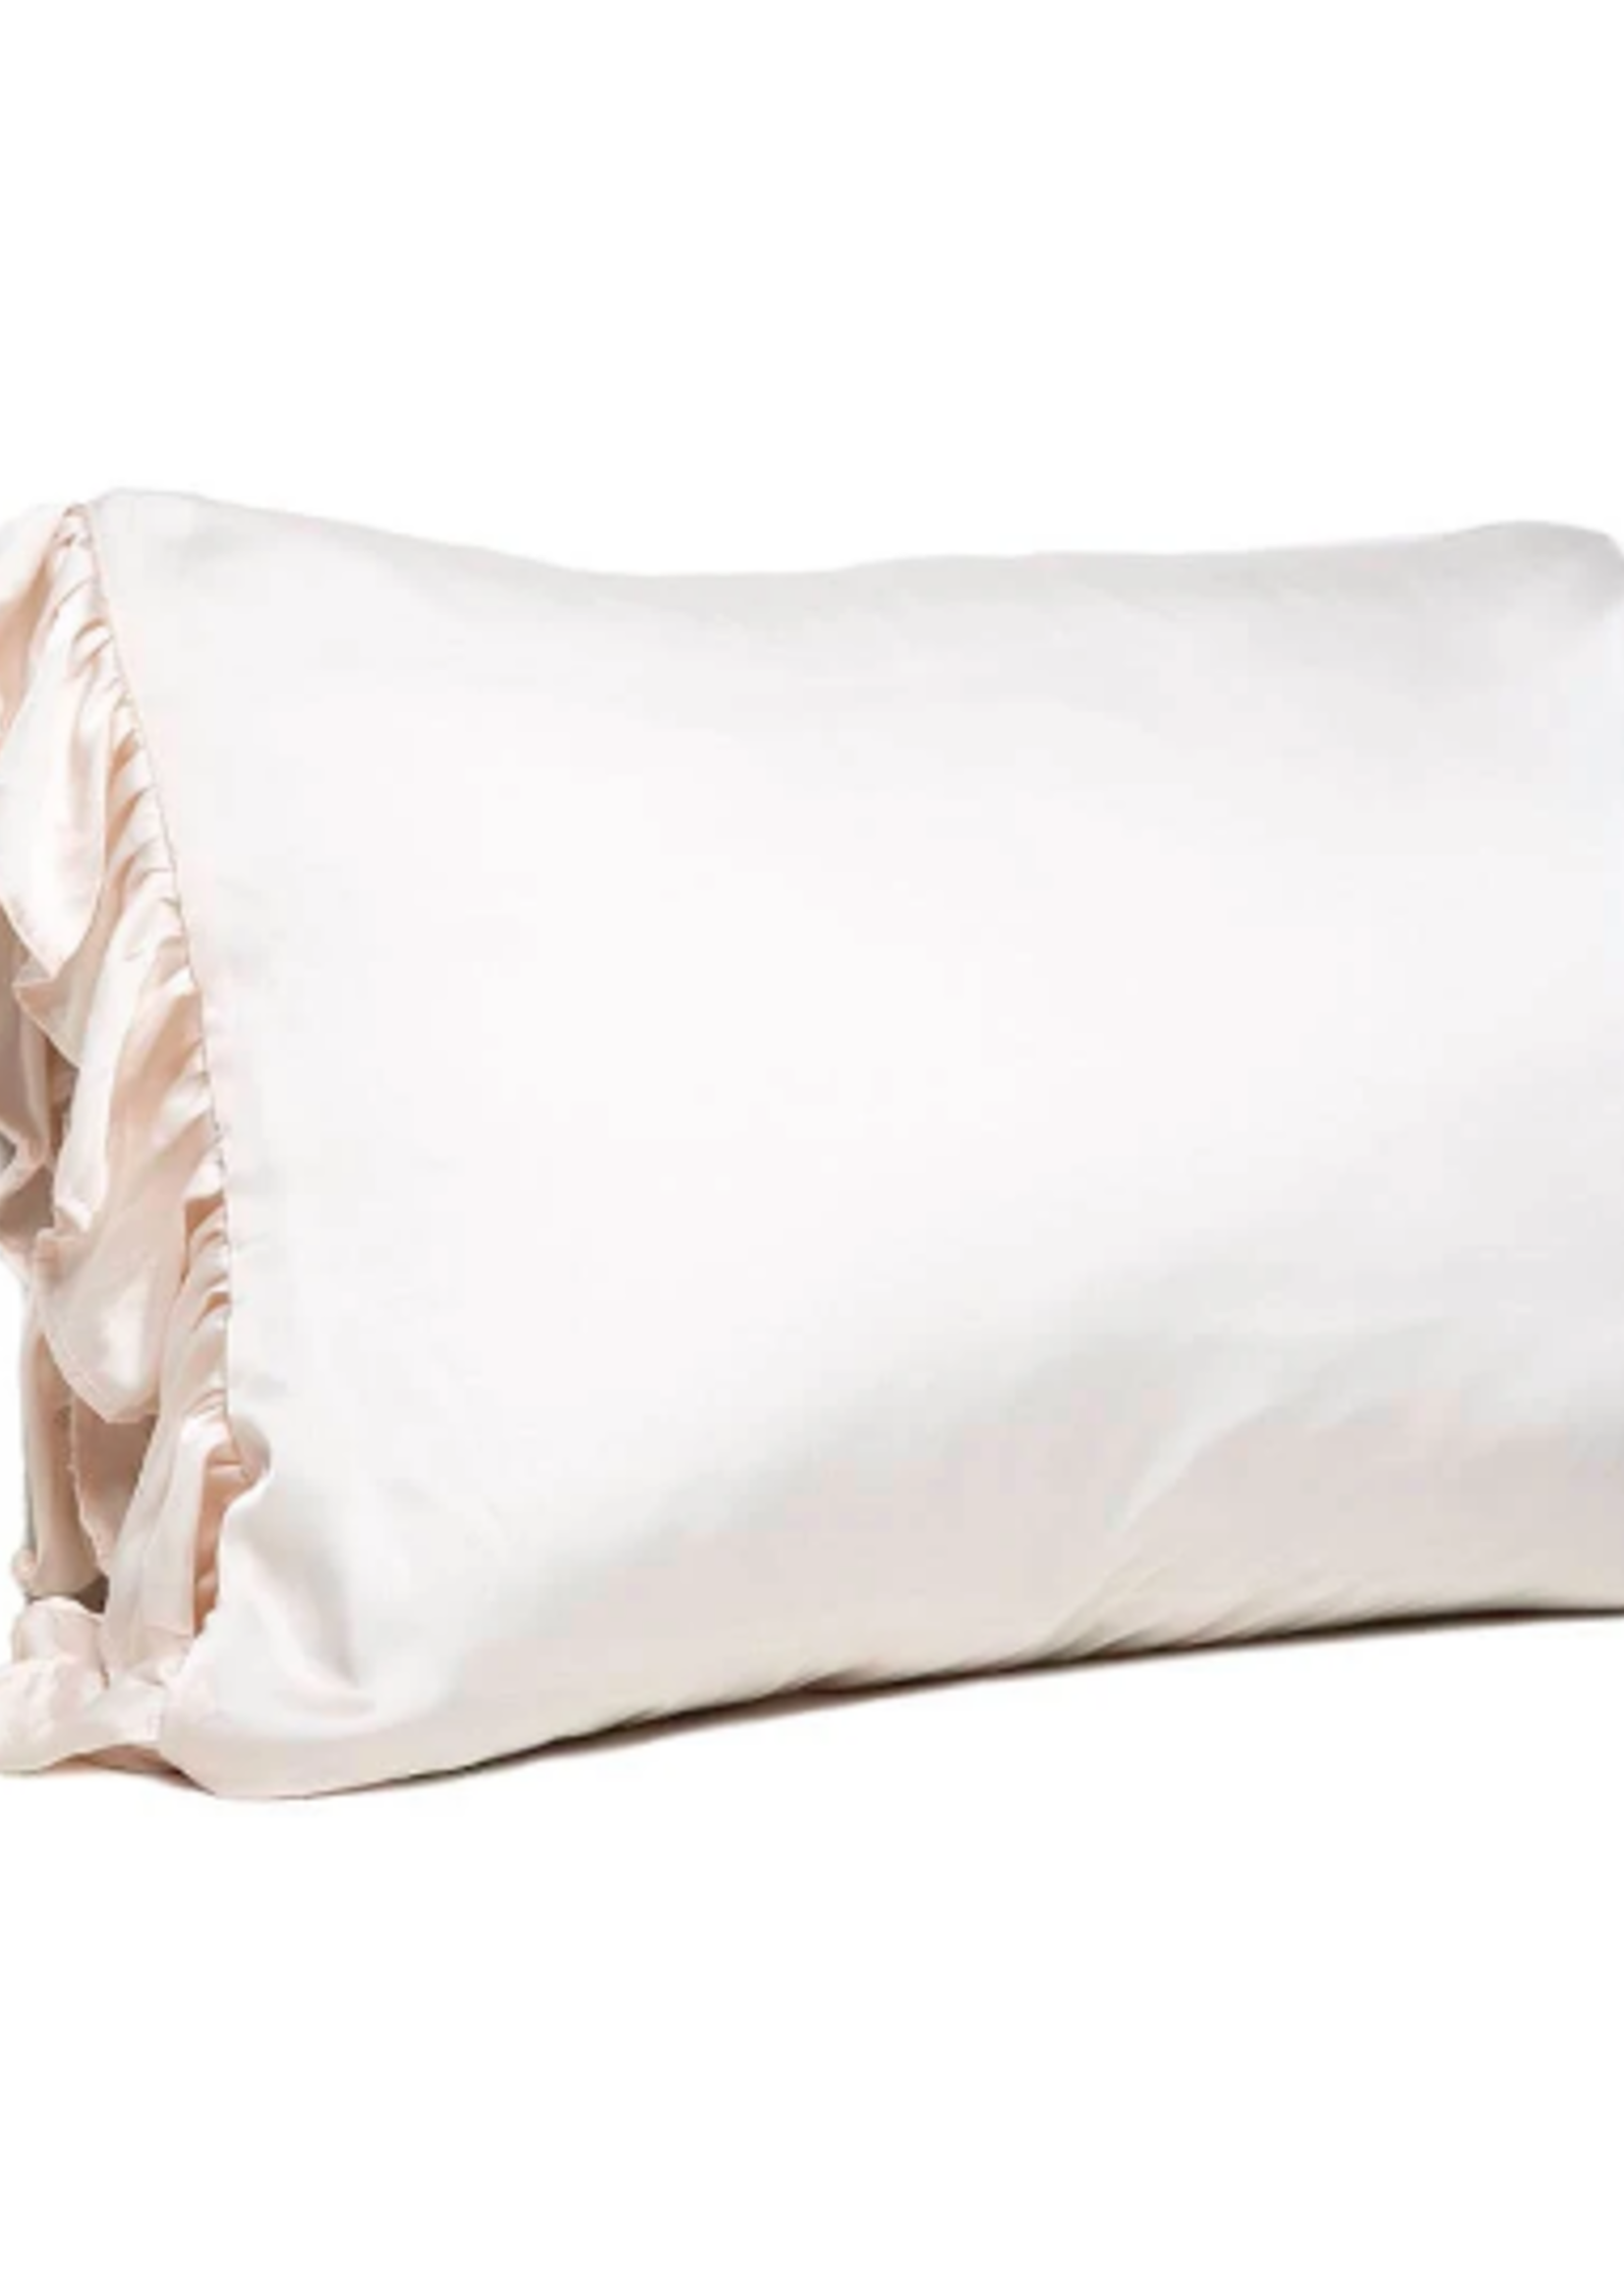 Silky Pillowcase with Ruffle